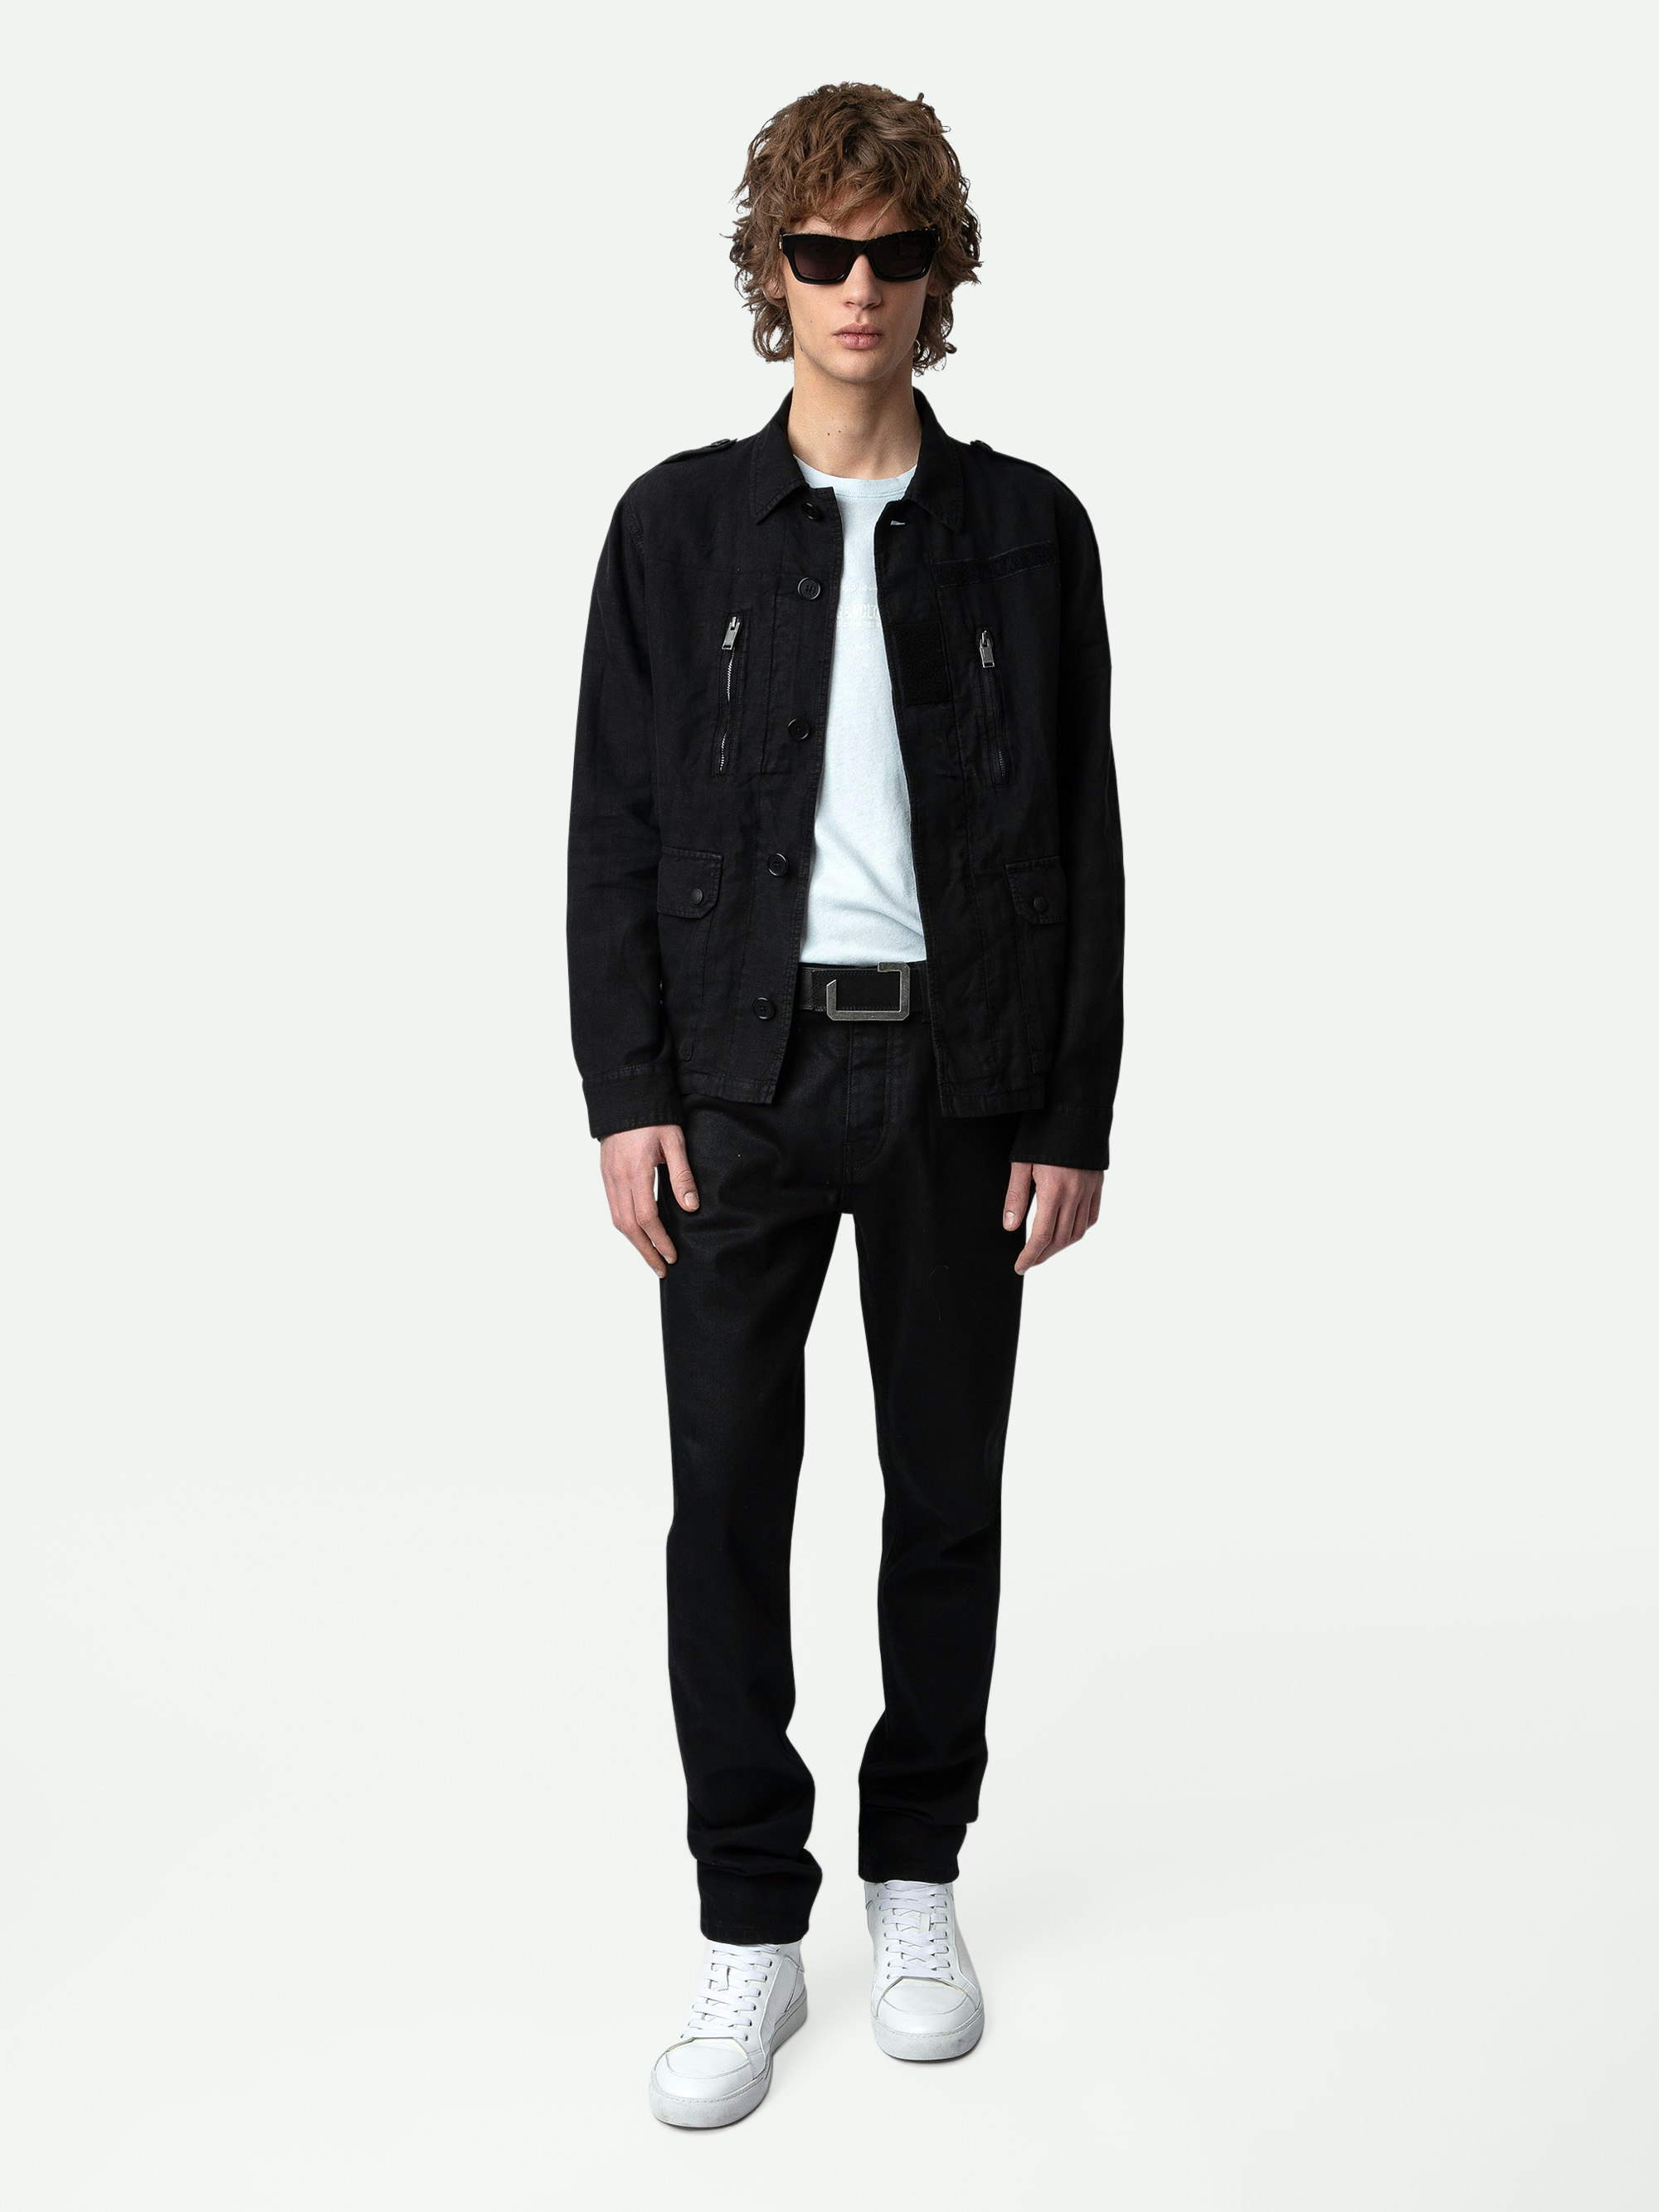 Kido Linen Jacket - Black washed linen jacket with pockets.